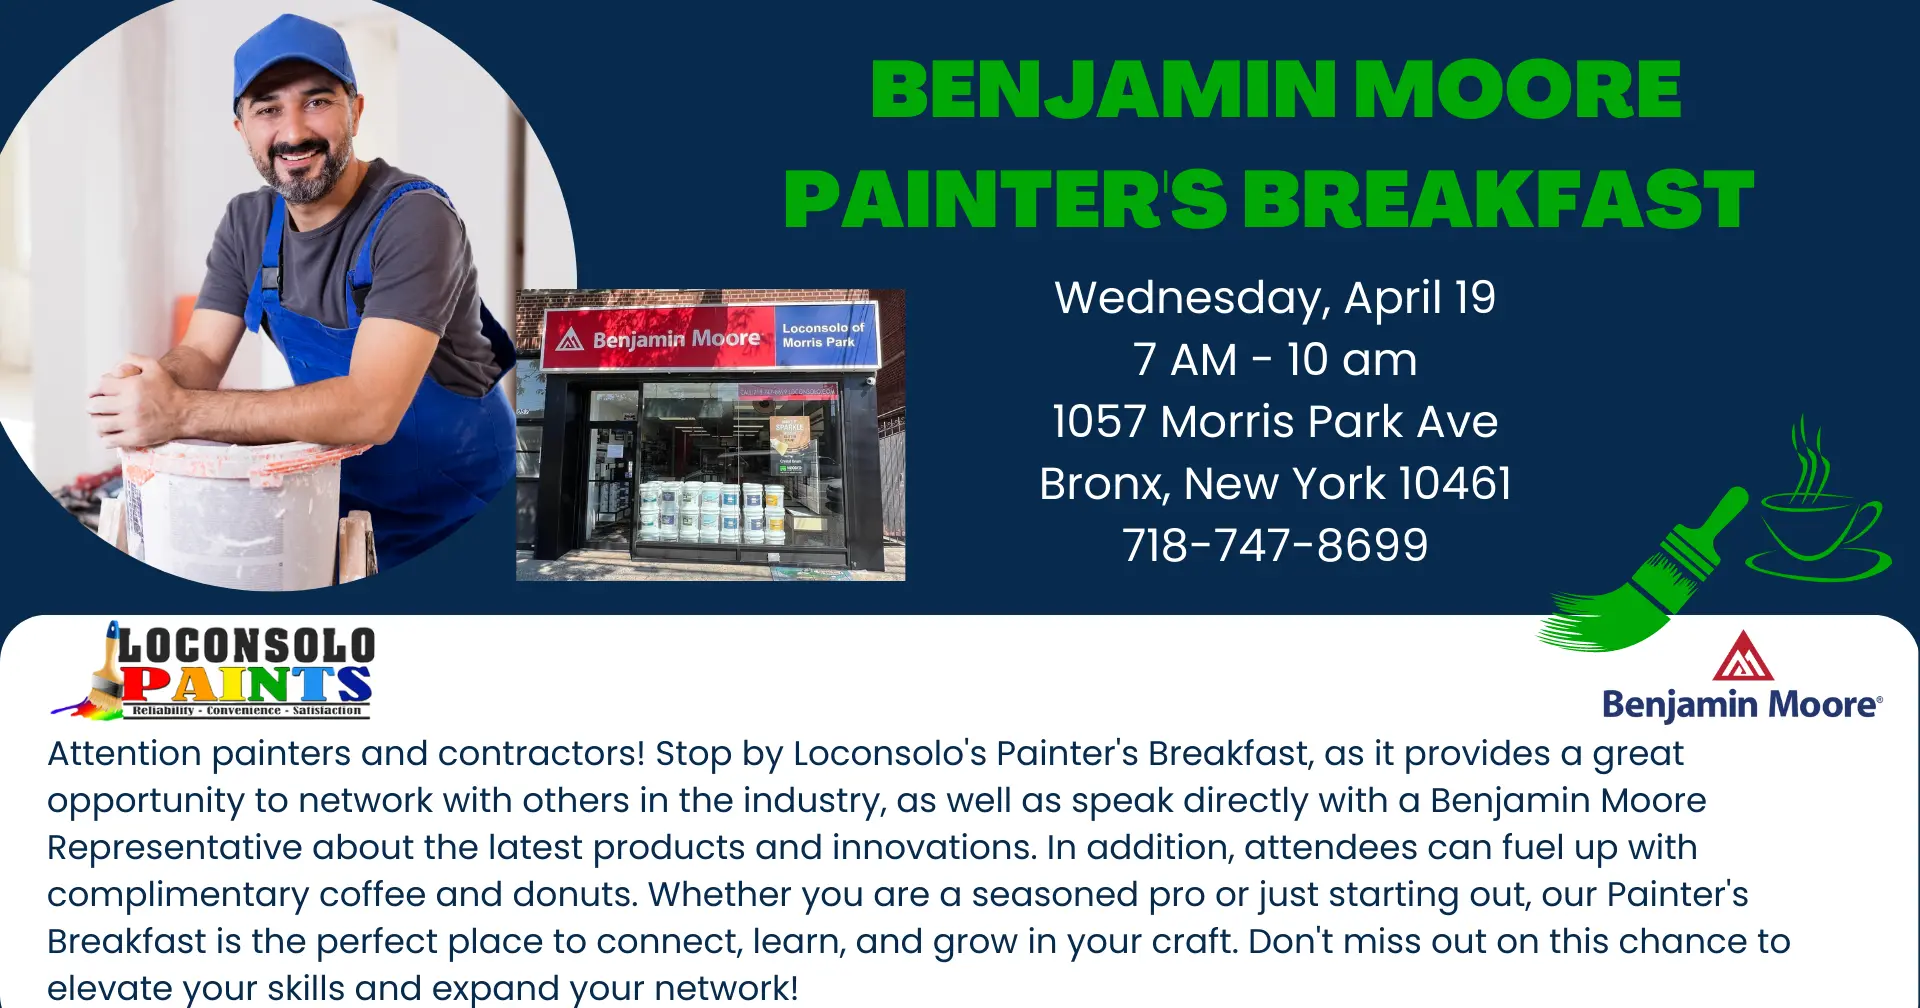 loconsolo paints painter's breakfast